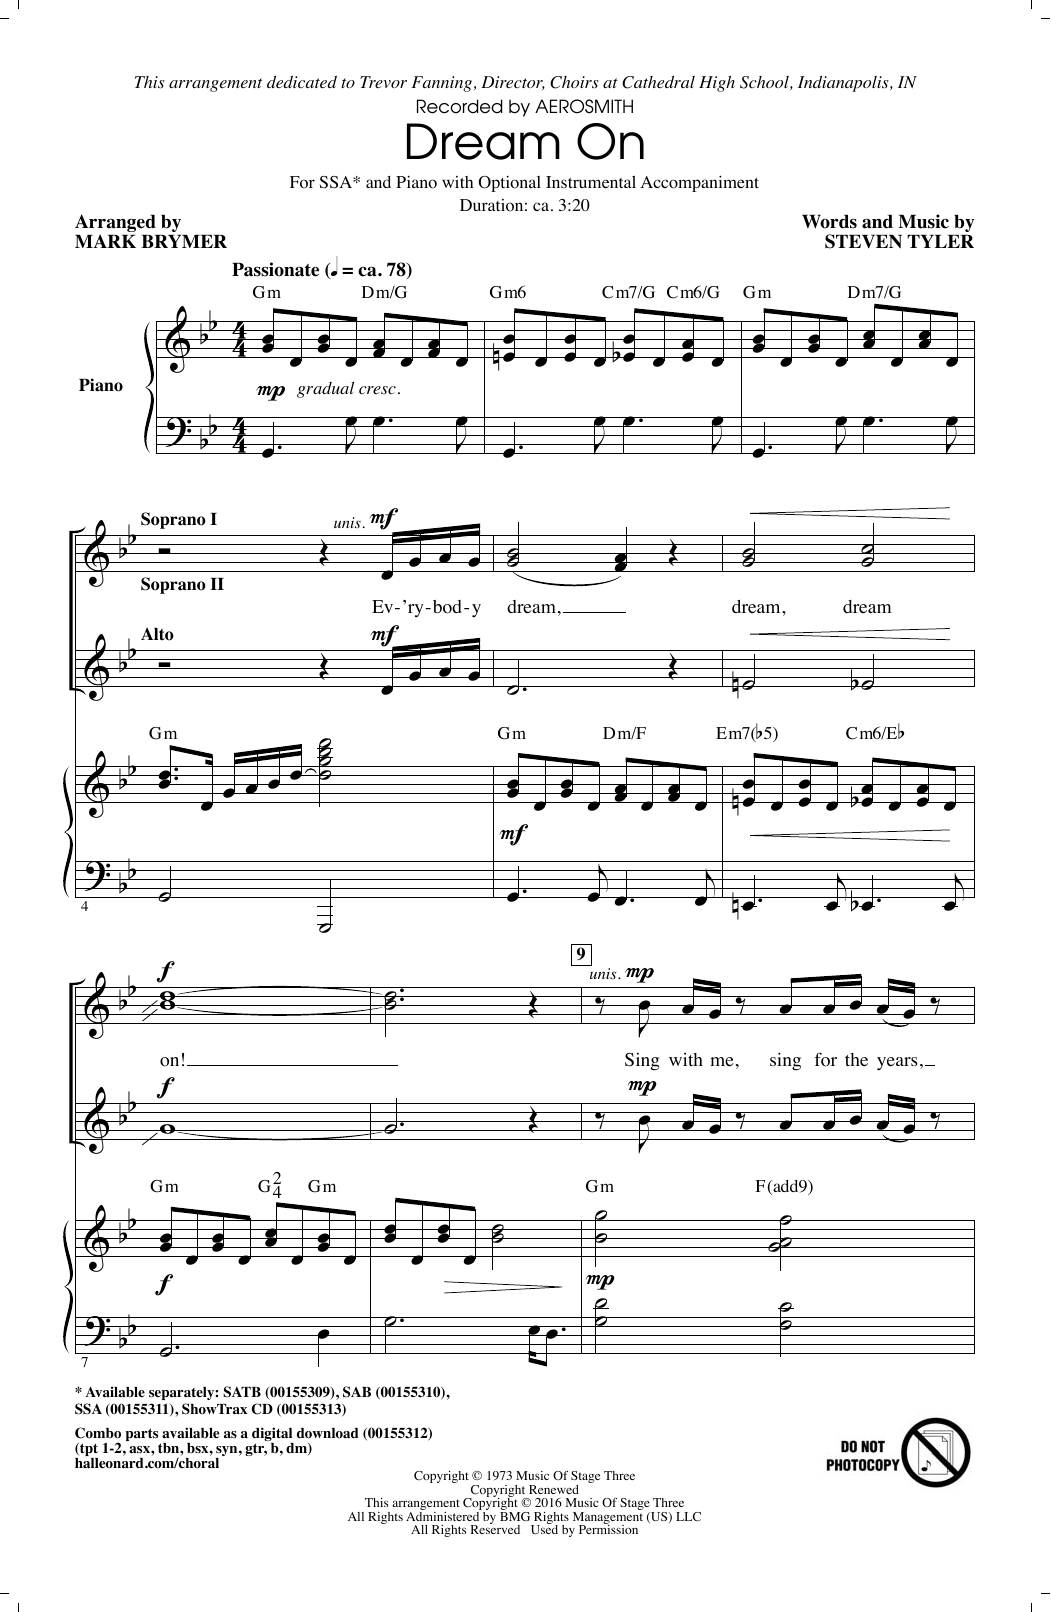 Aerosmith Dream On (arr. Mark Brymer) Sheet Music Notes & Chords for SAB - Download or Print PDF